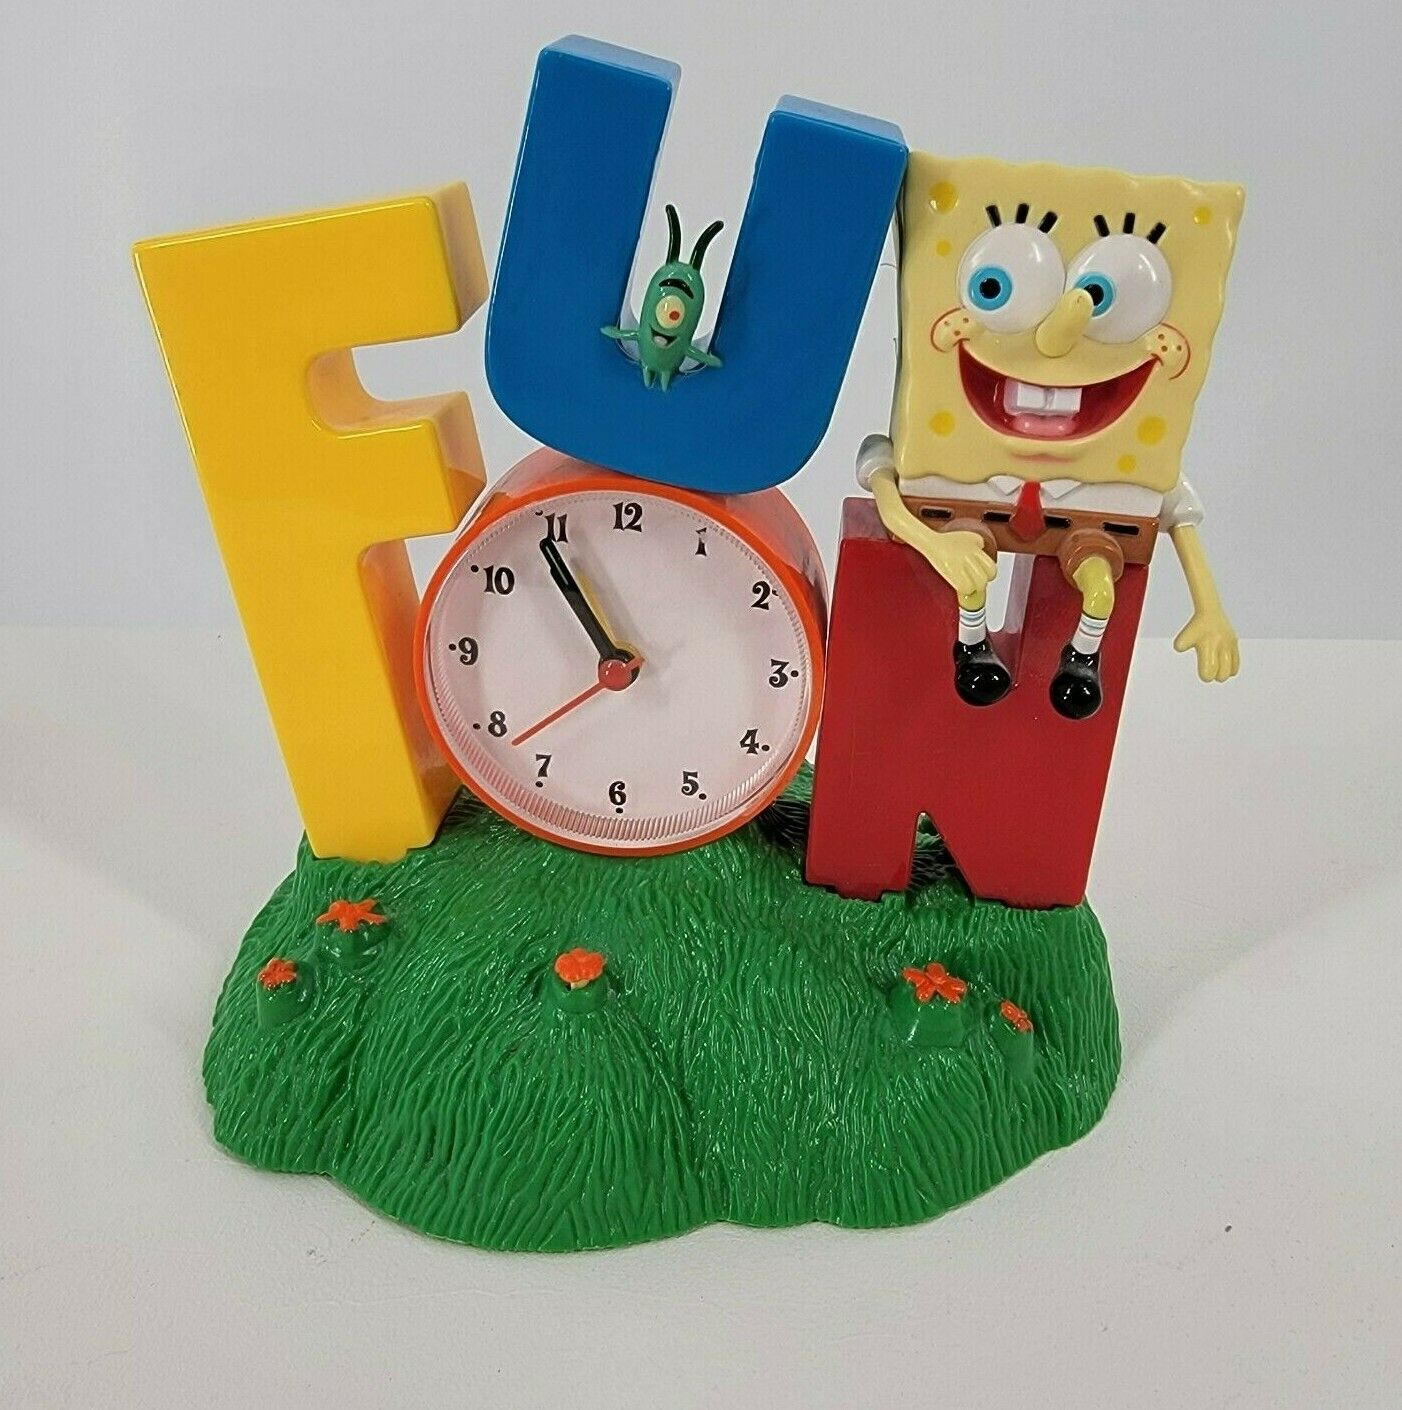 Spongebob Vintage 2002 FUN F is for Friends Plankton Alarm Clock Works Great